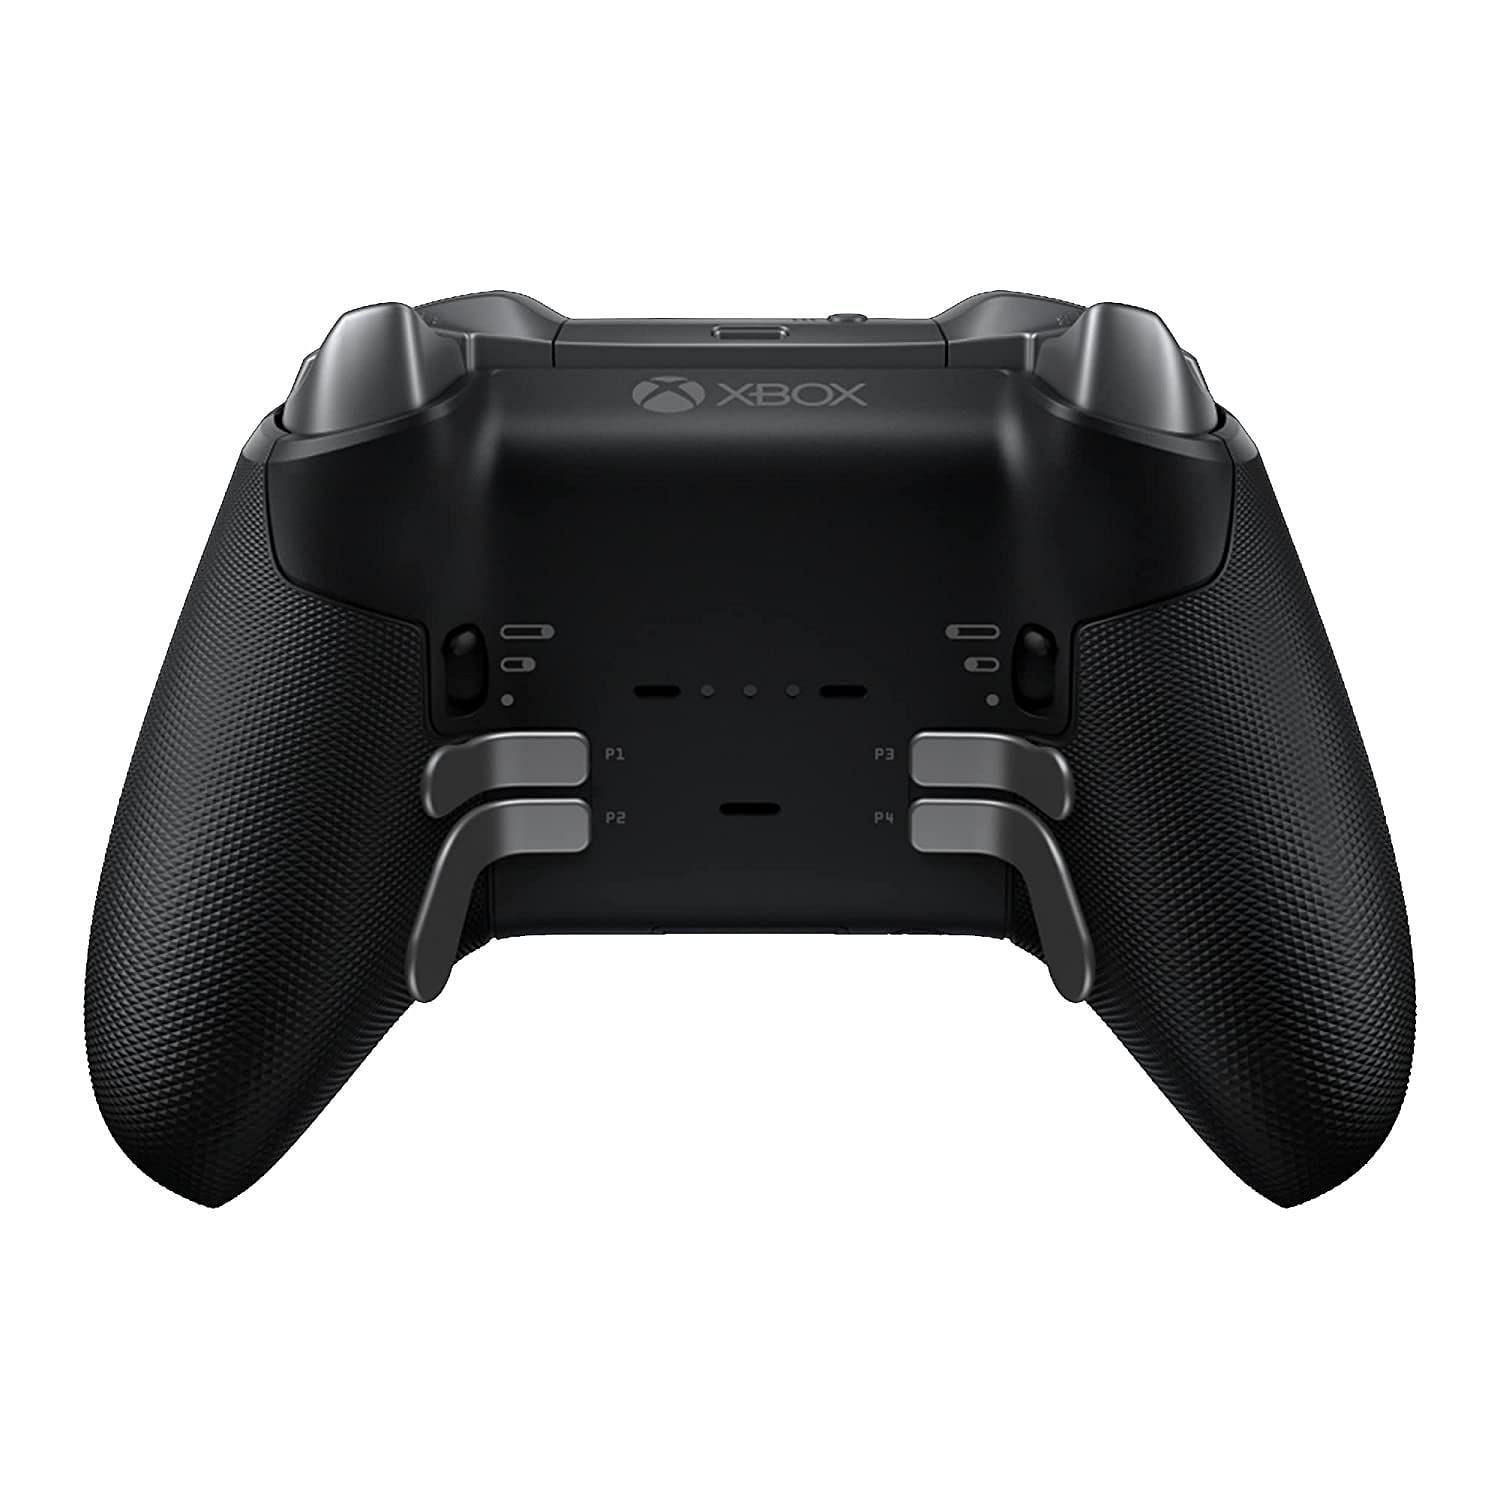 Back Paddles in Xbox Elite Wireless controller series 2 (Image via amazon.com)